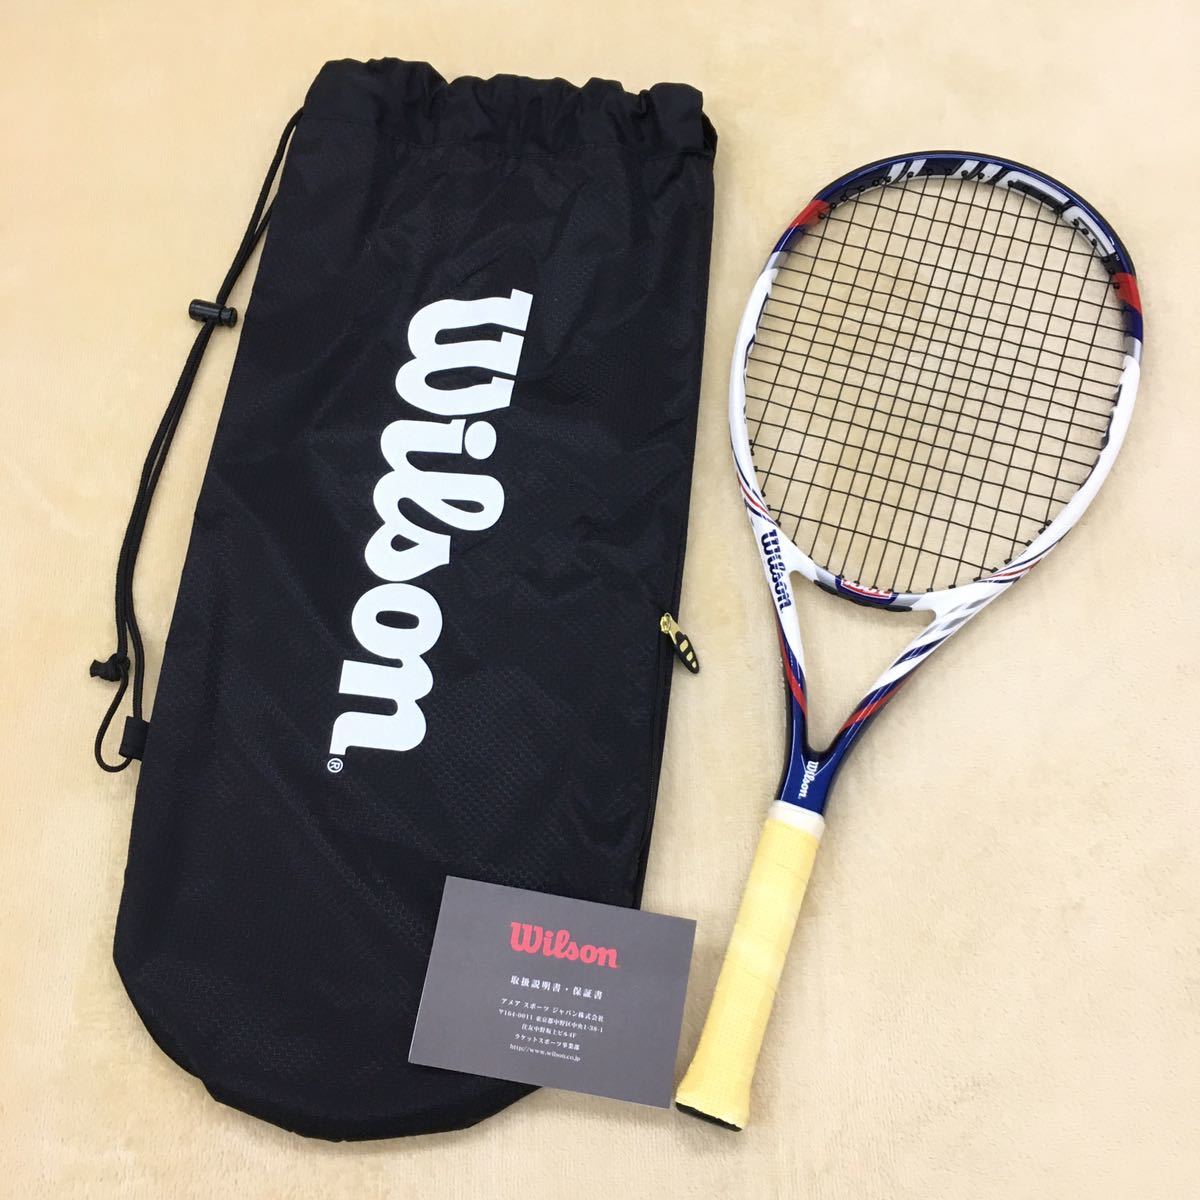 Wilson JUICE100L amplifeel 360 ウィルソン テニスラケット 硬式 スポーツ用品4 1/4 L2 グリップサイズ2 説明書 収納袋付き